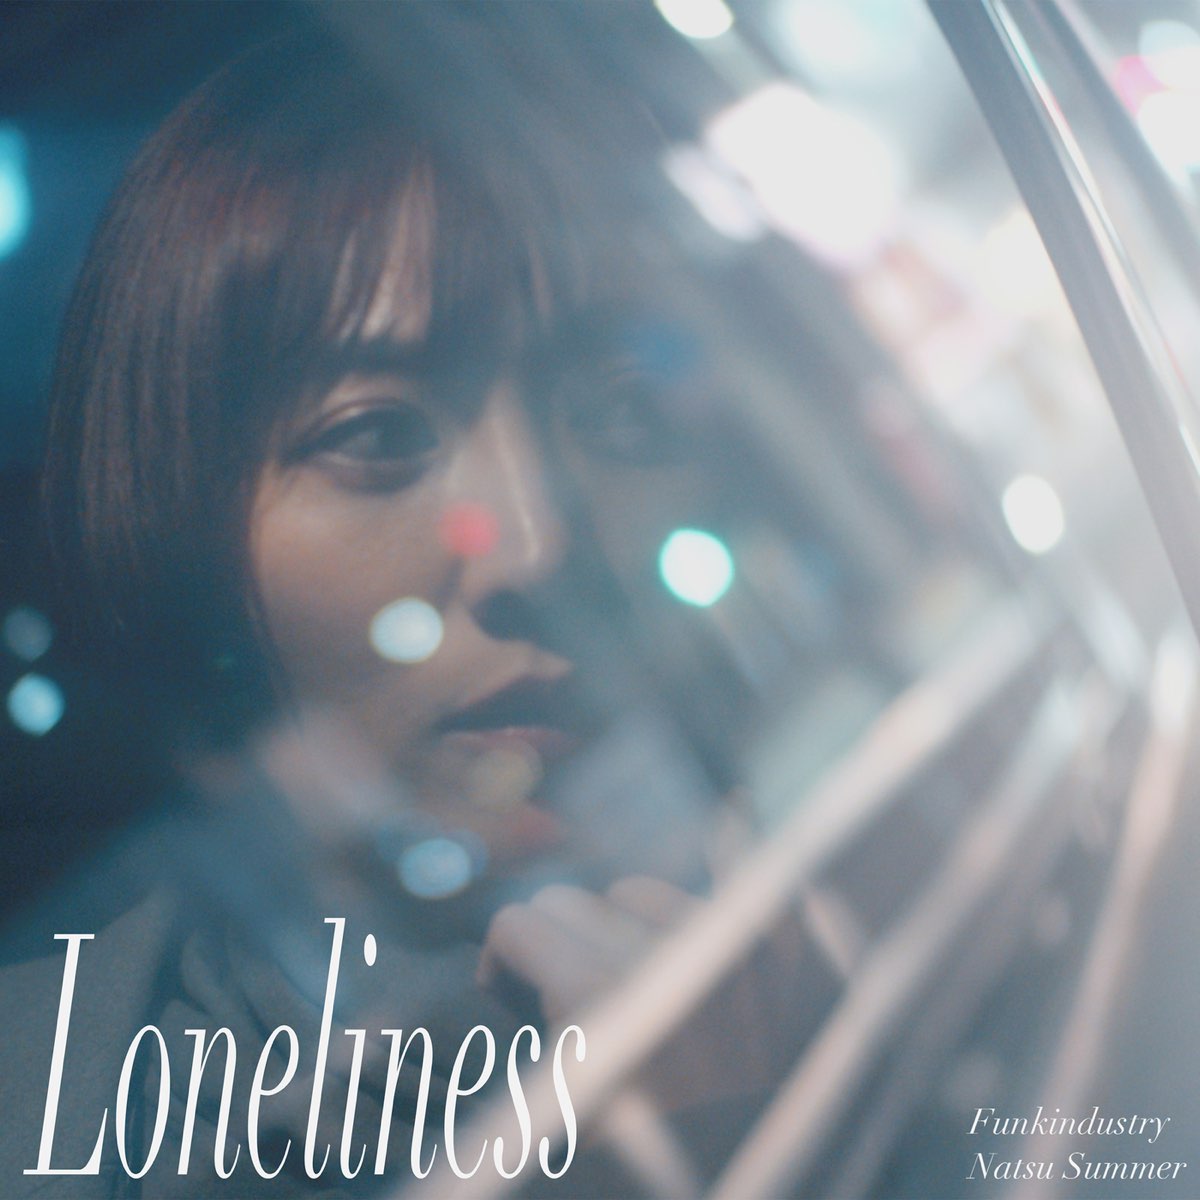 "Loneliness" w/ ナツ・サマー